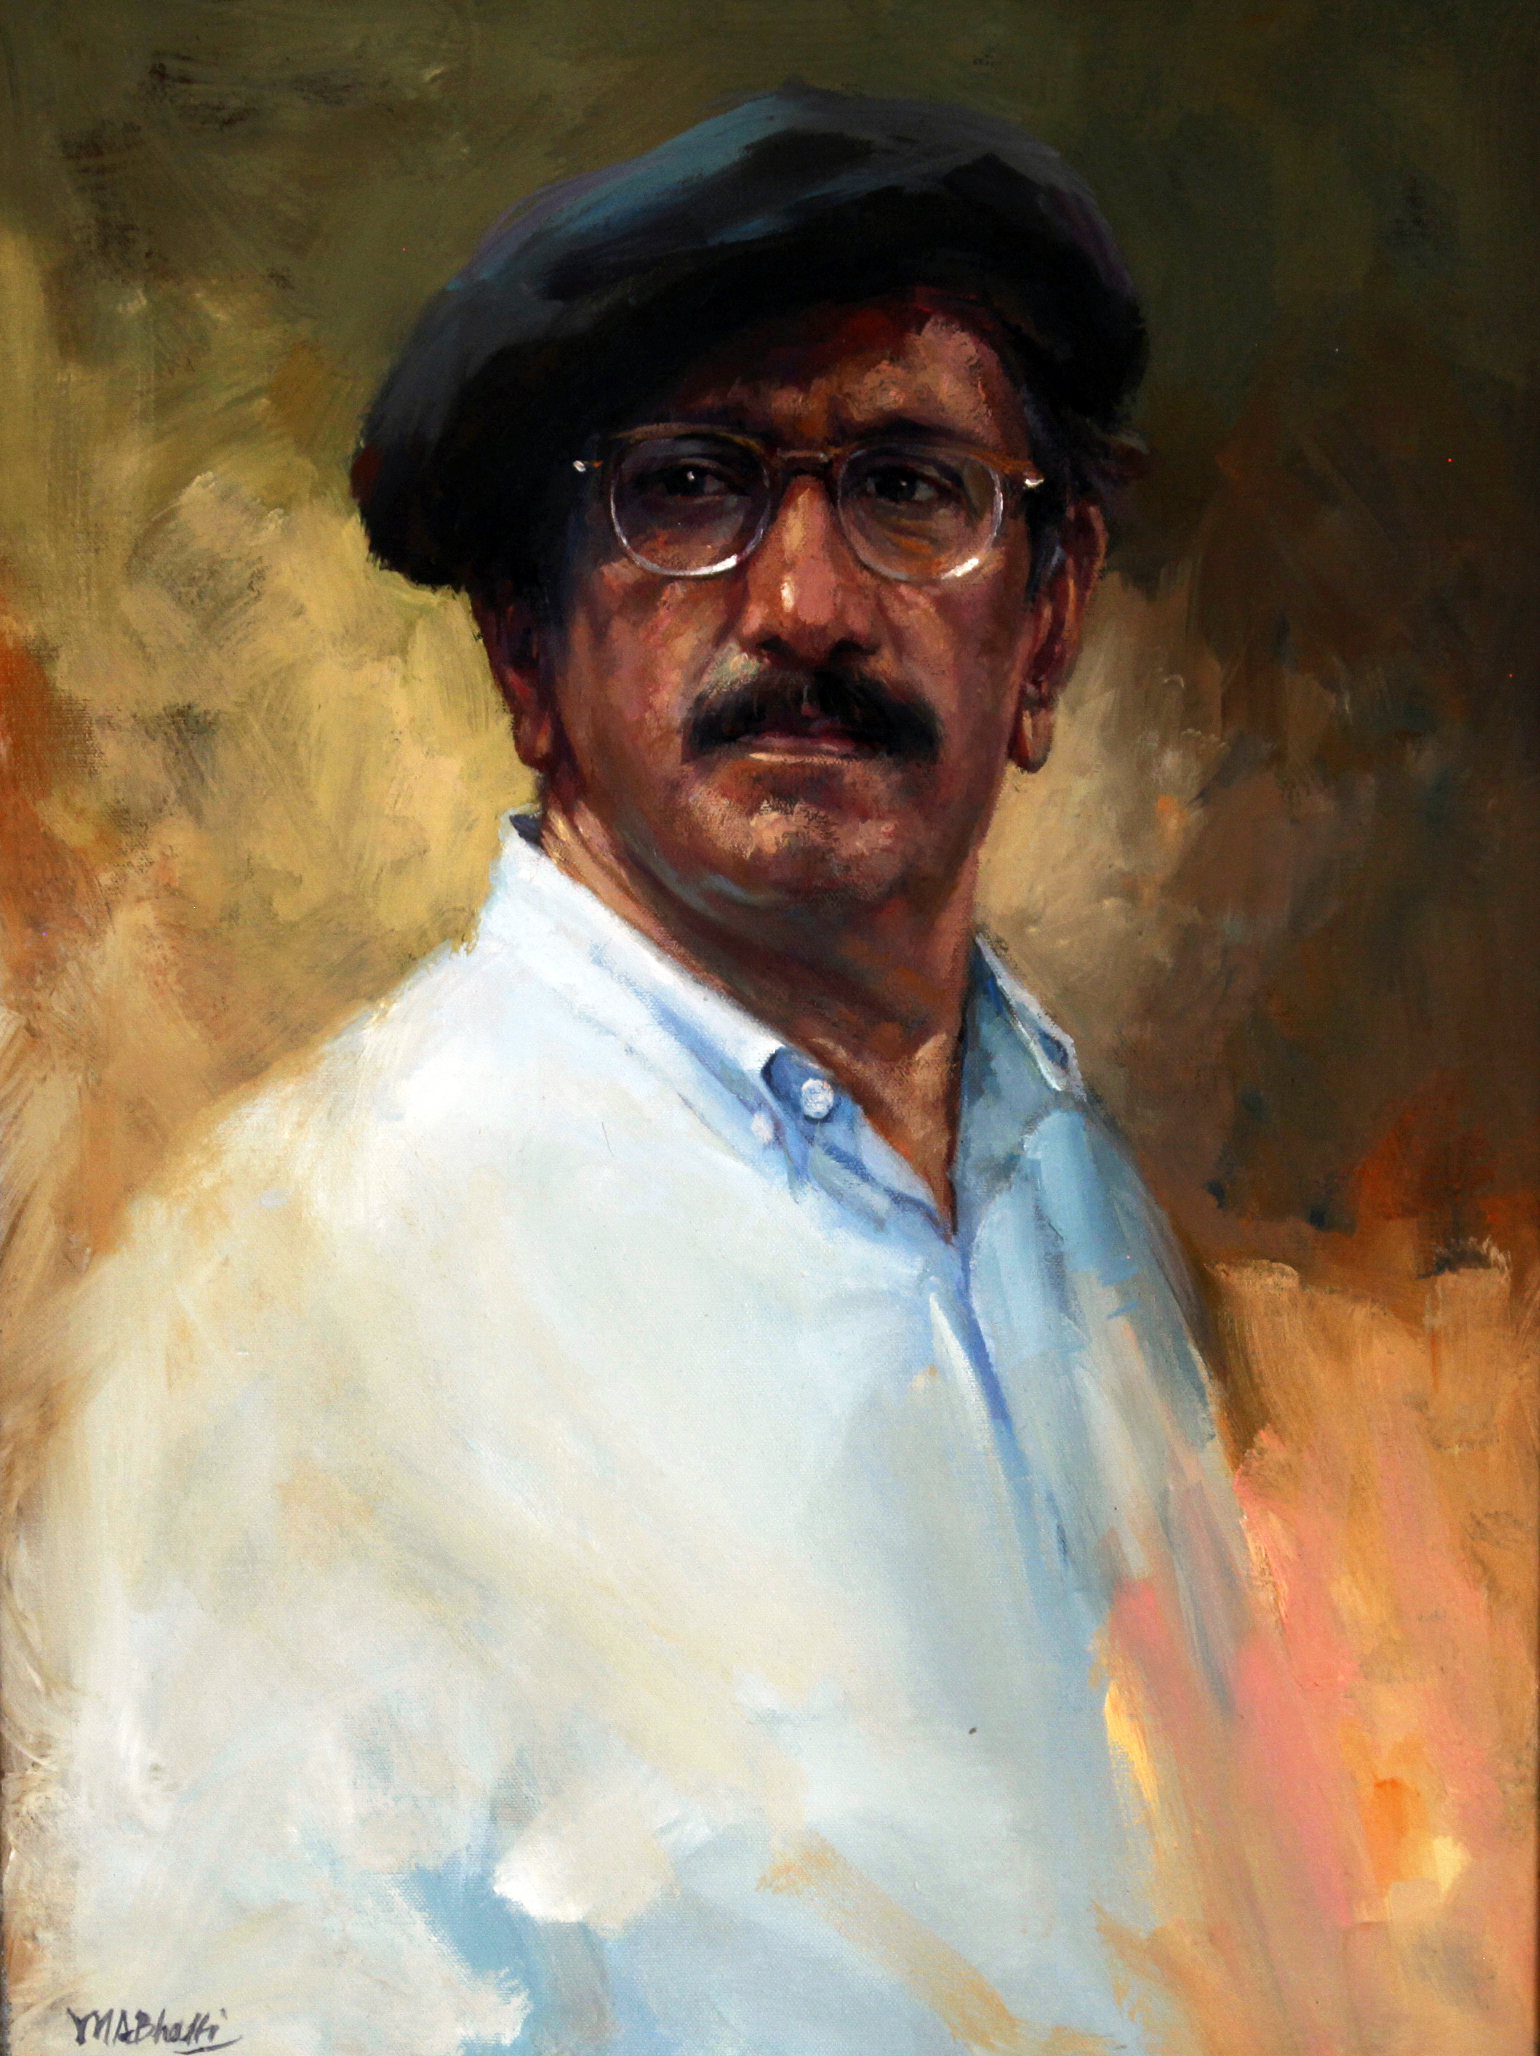 Self Portrait Oil on Canvas 24 X 18 (2018)